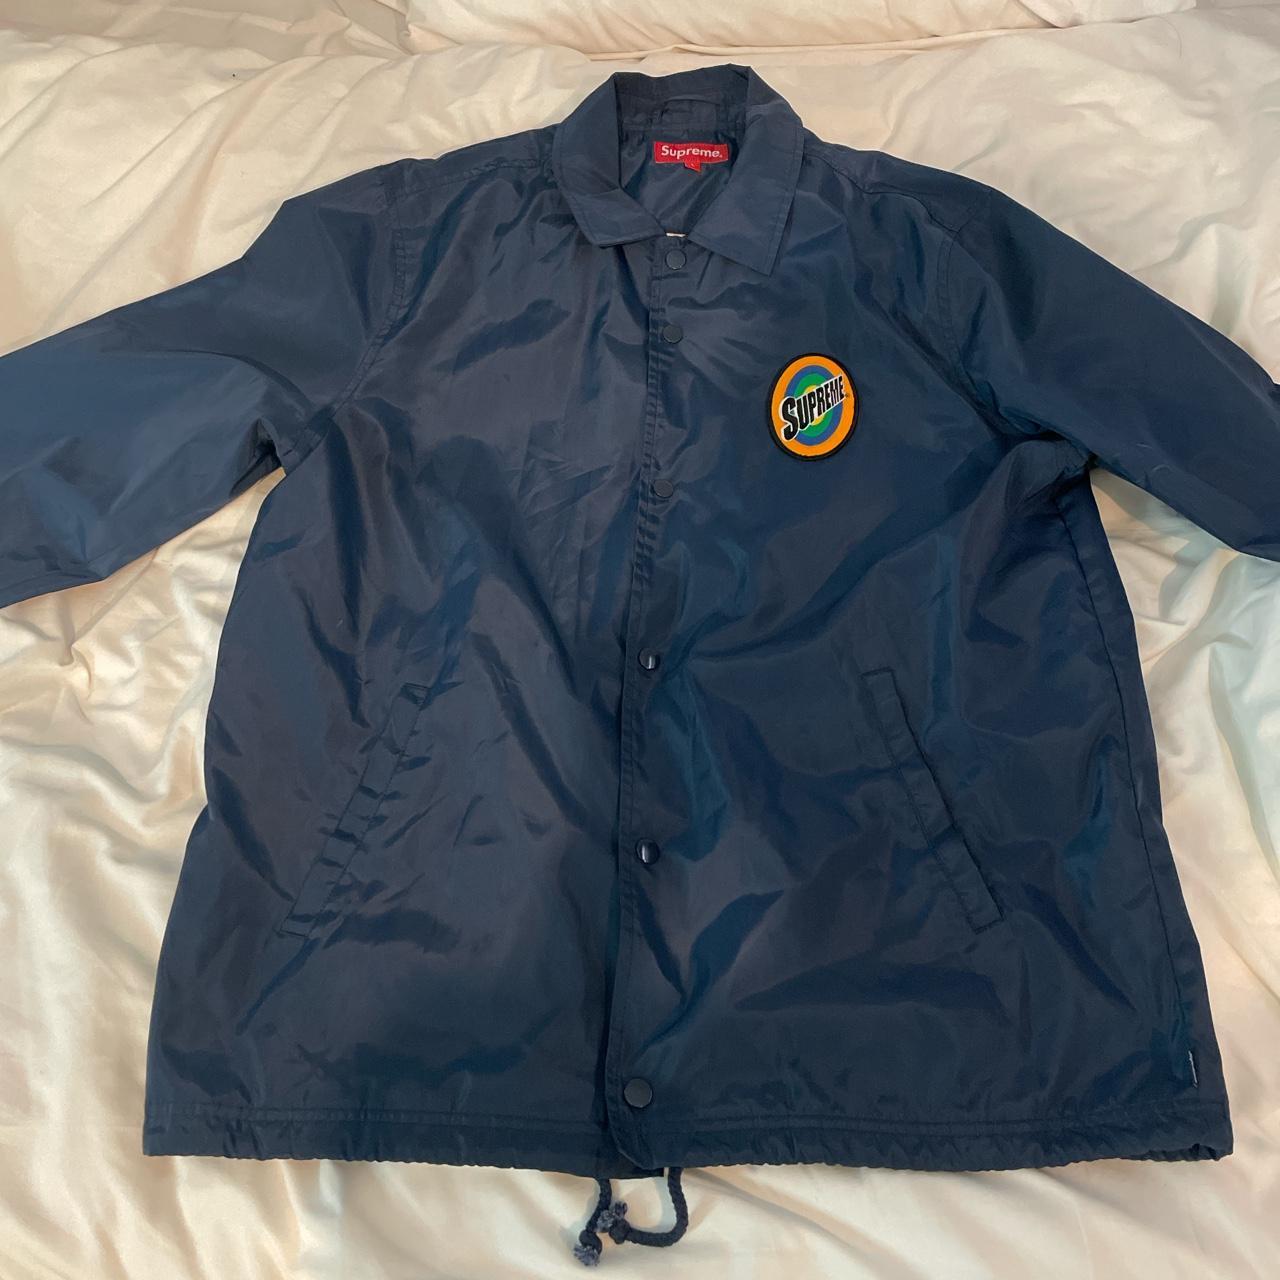 Supreme Spin coach jacket, Colour: Navy, Size:...